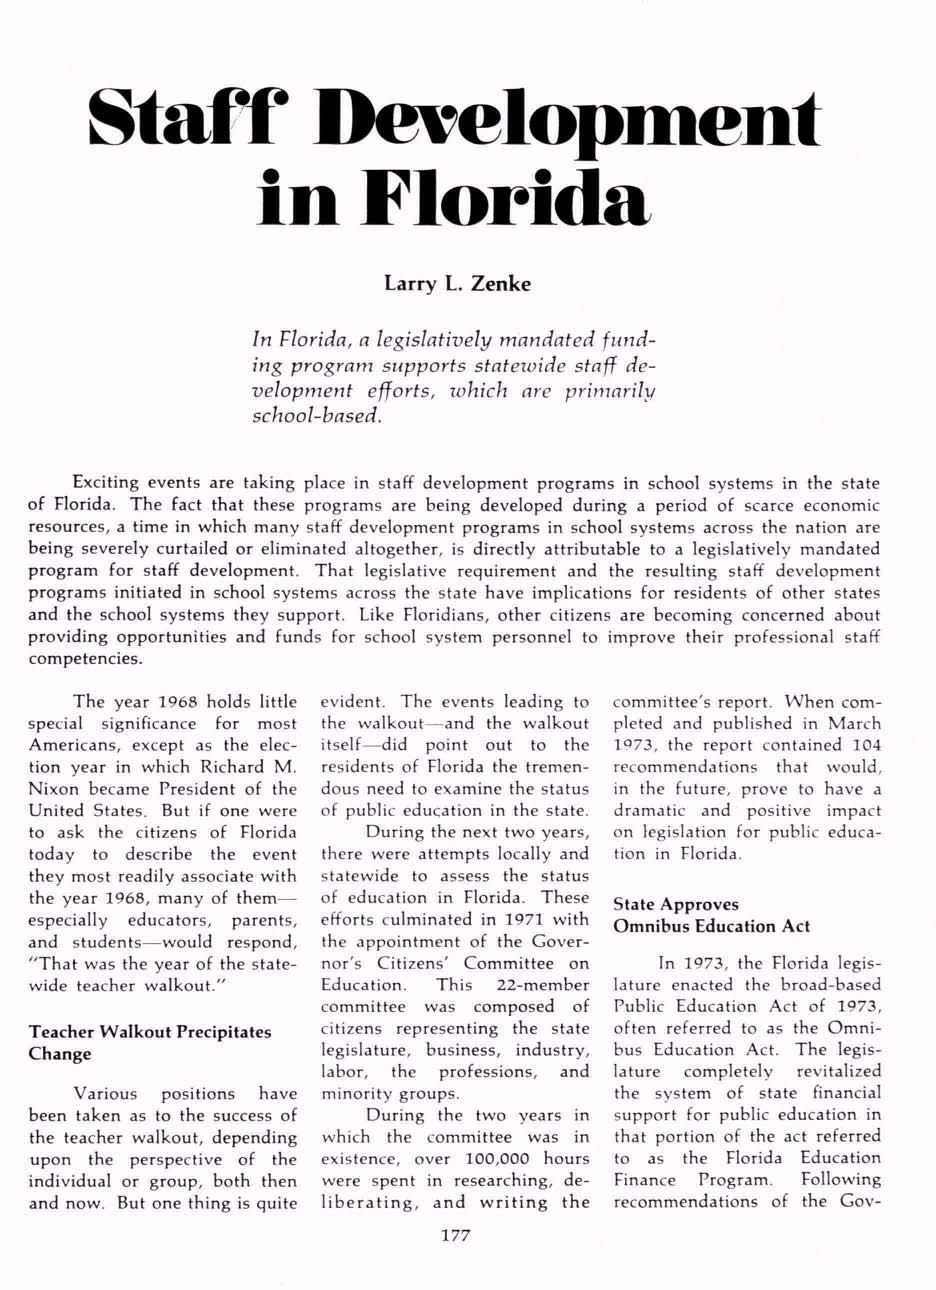 Staff Development in Florida Larry L. Zenke In Florida, a legislatively mandated fund ing program supports statewide staff de velopment efforts, which are primarily school-based.